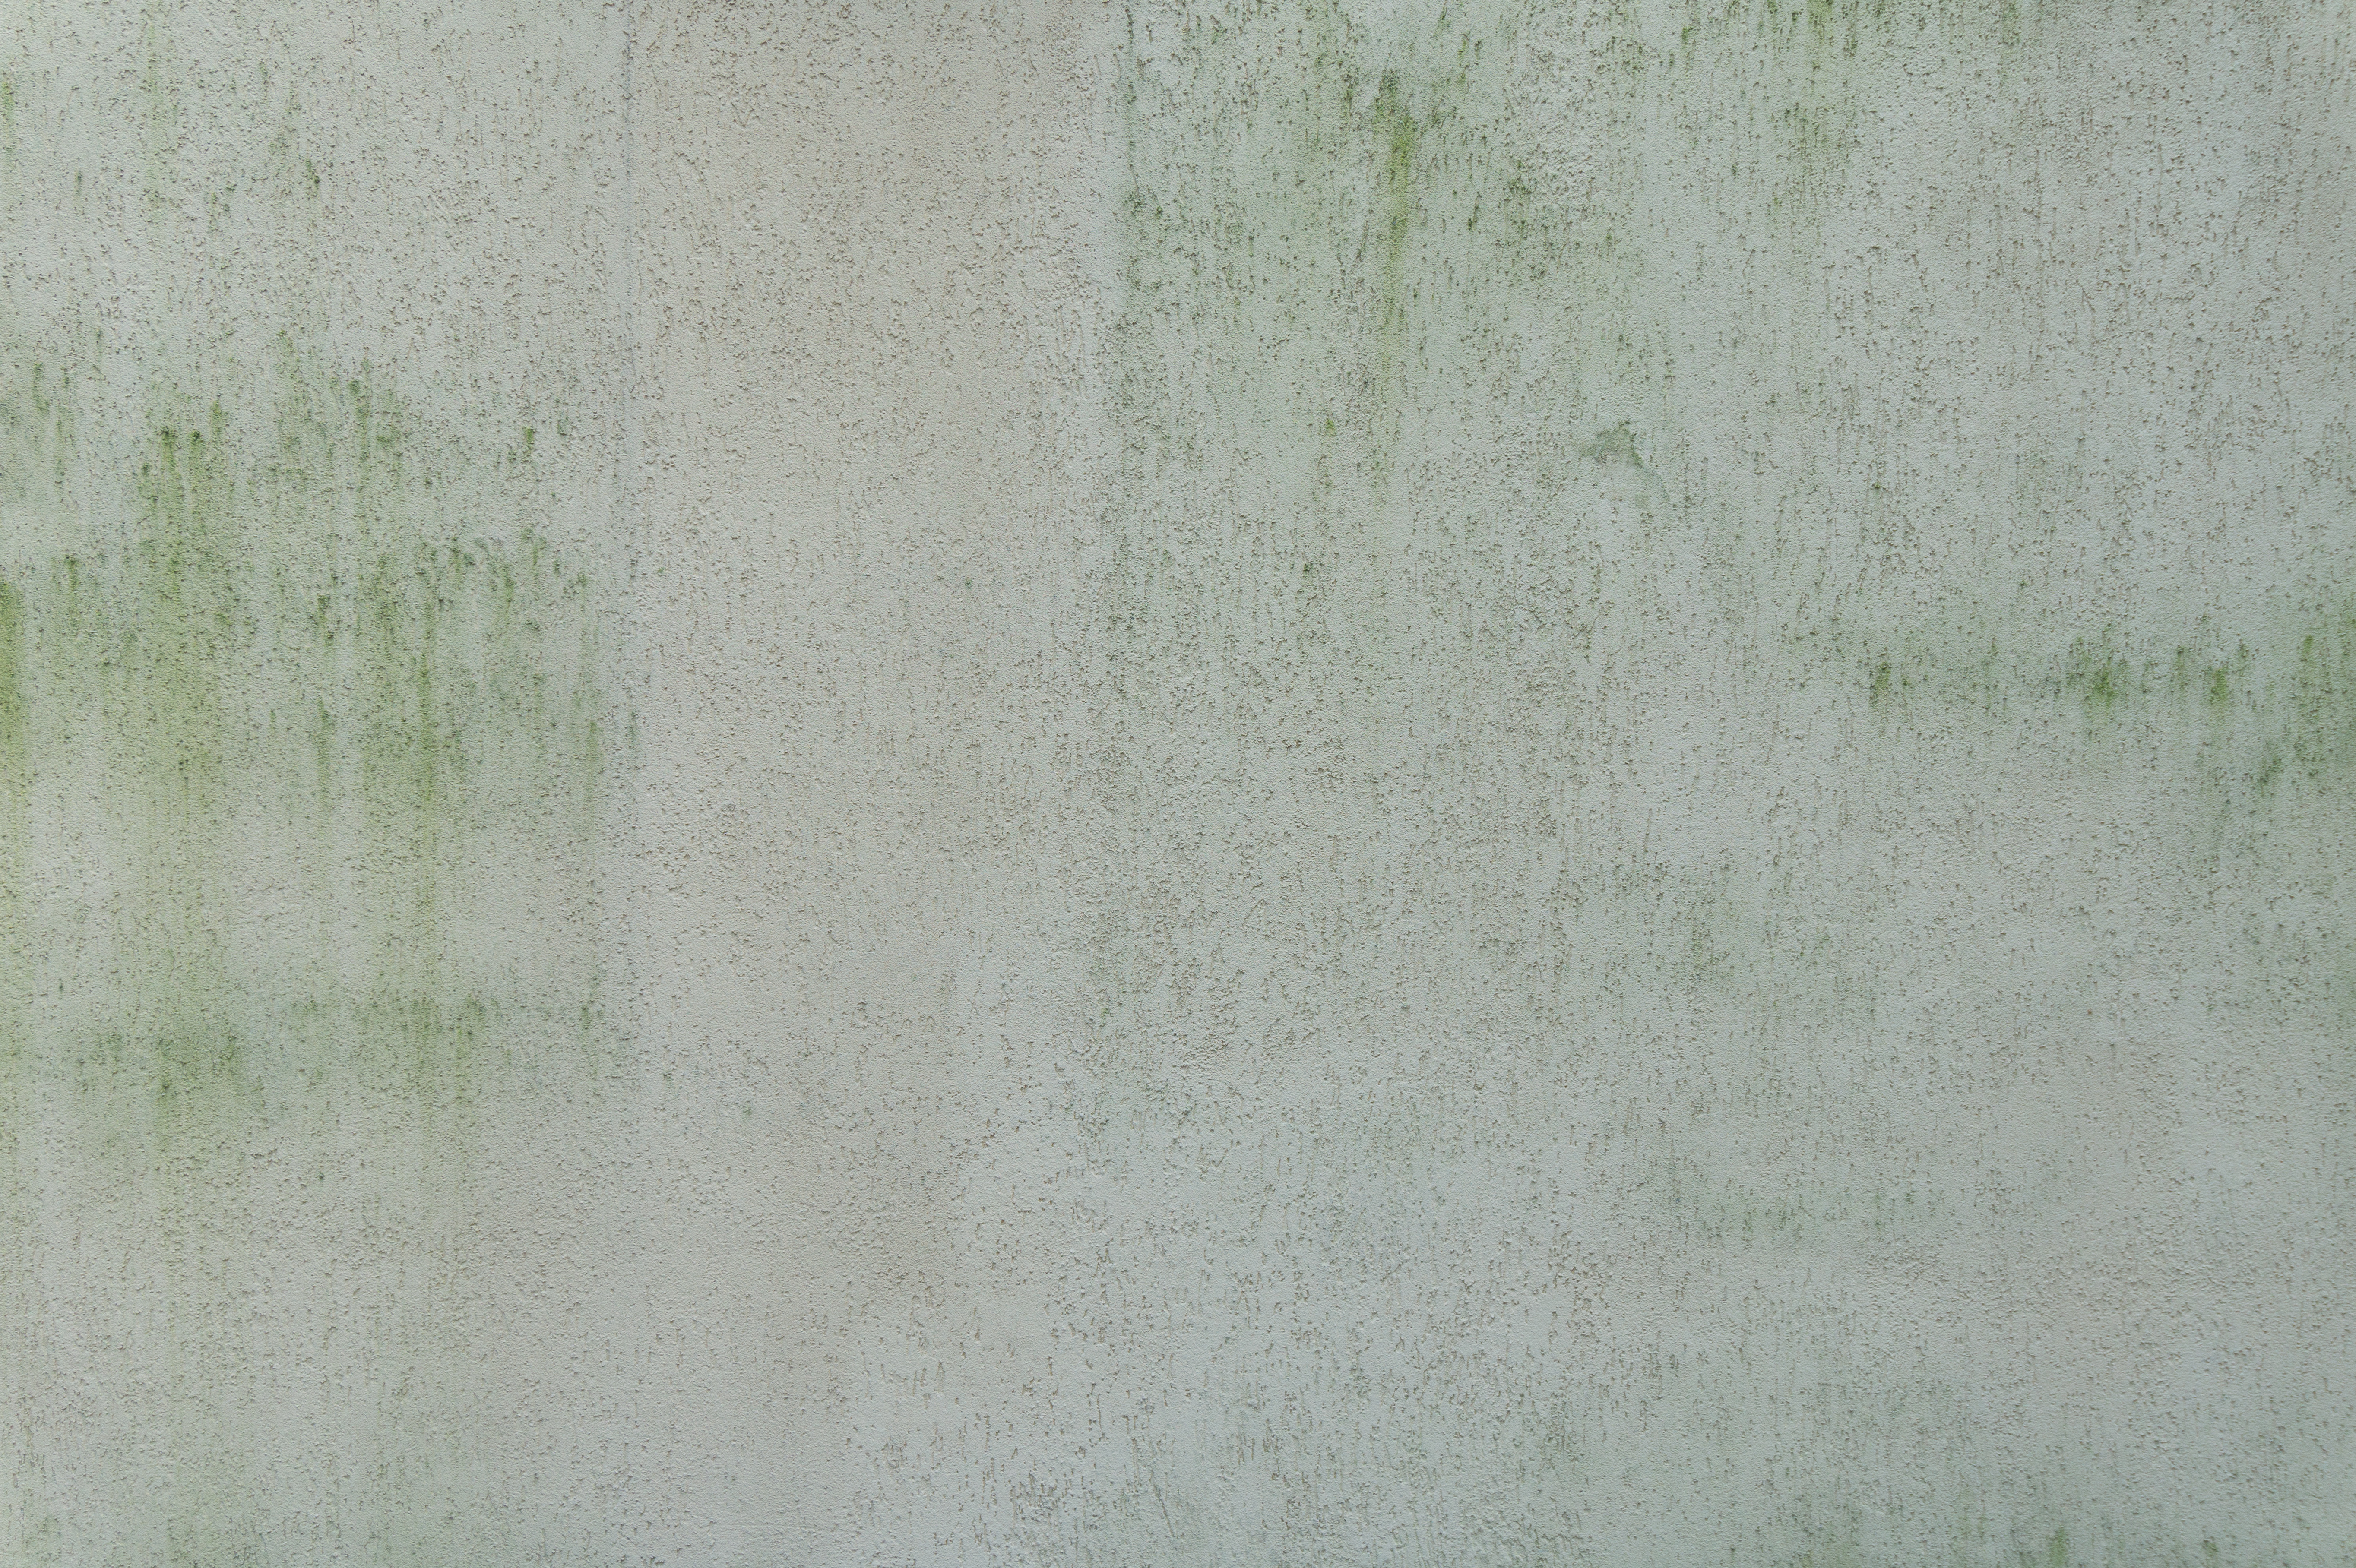 Concrete with green streaks - Concrete - Texturify - Free textures